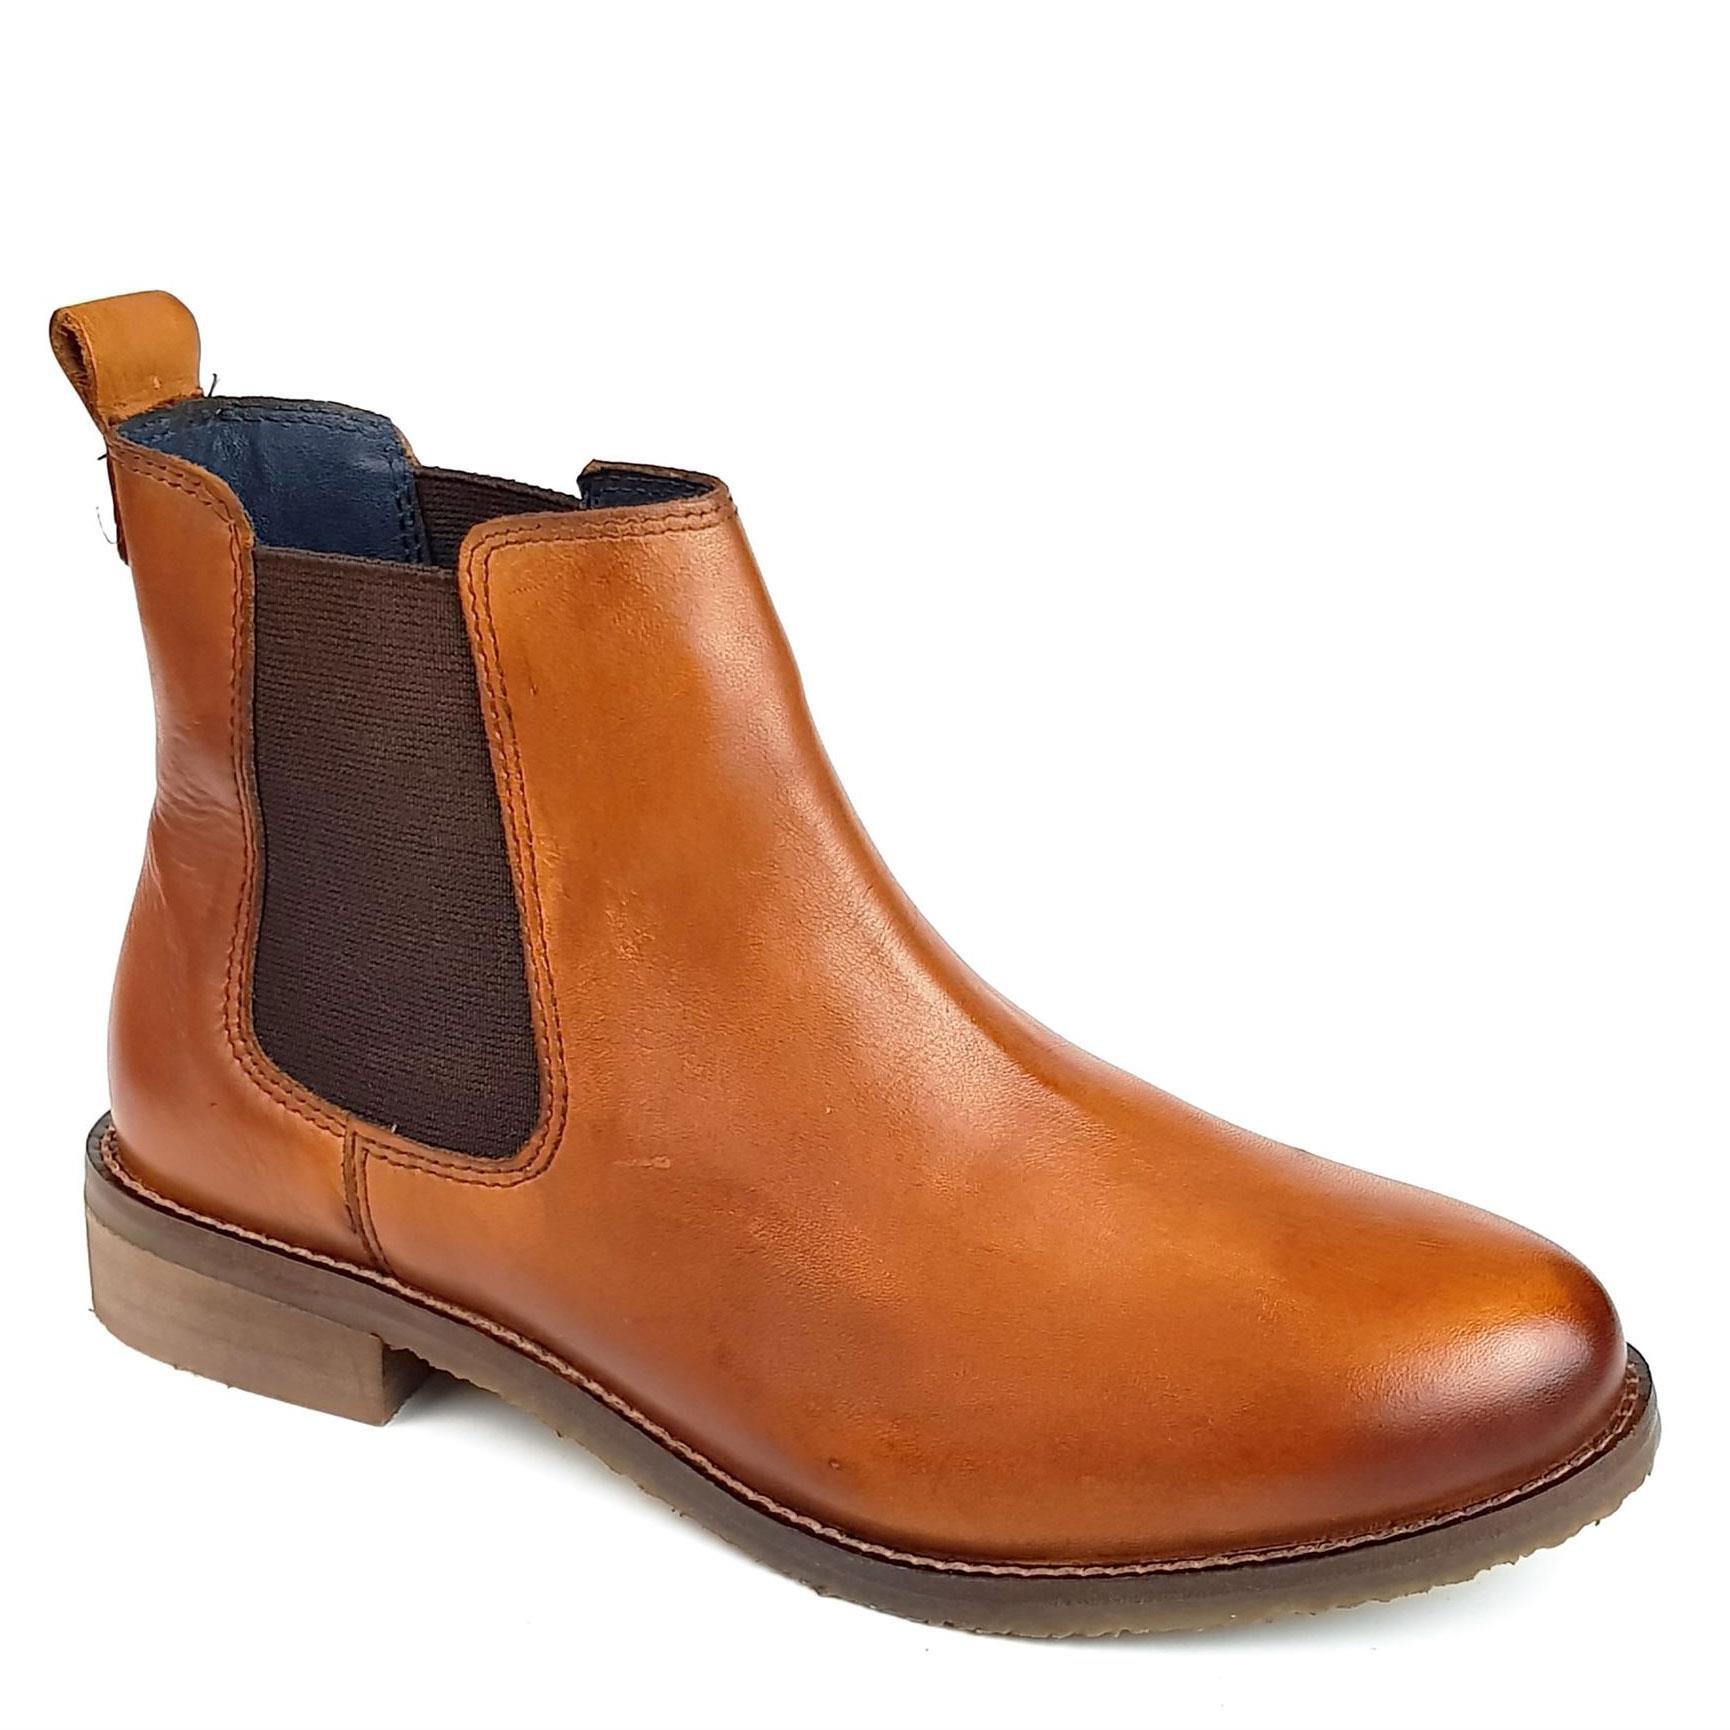 Кожаные ботинки челси Aintree без застежек Frank James, коричневый ботинки челси из кожи 38 серебристый